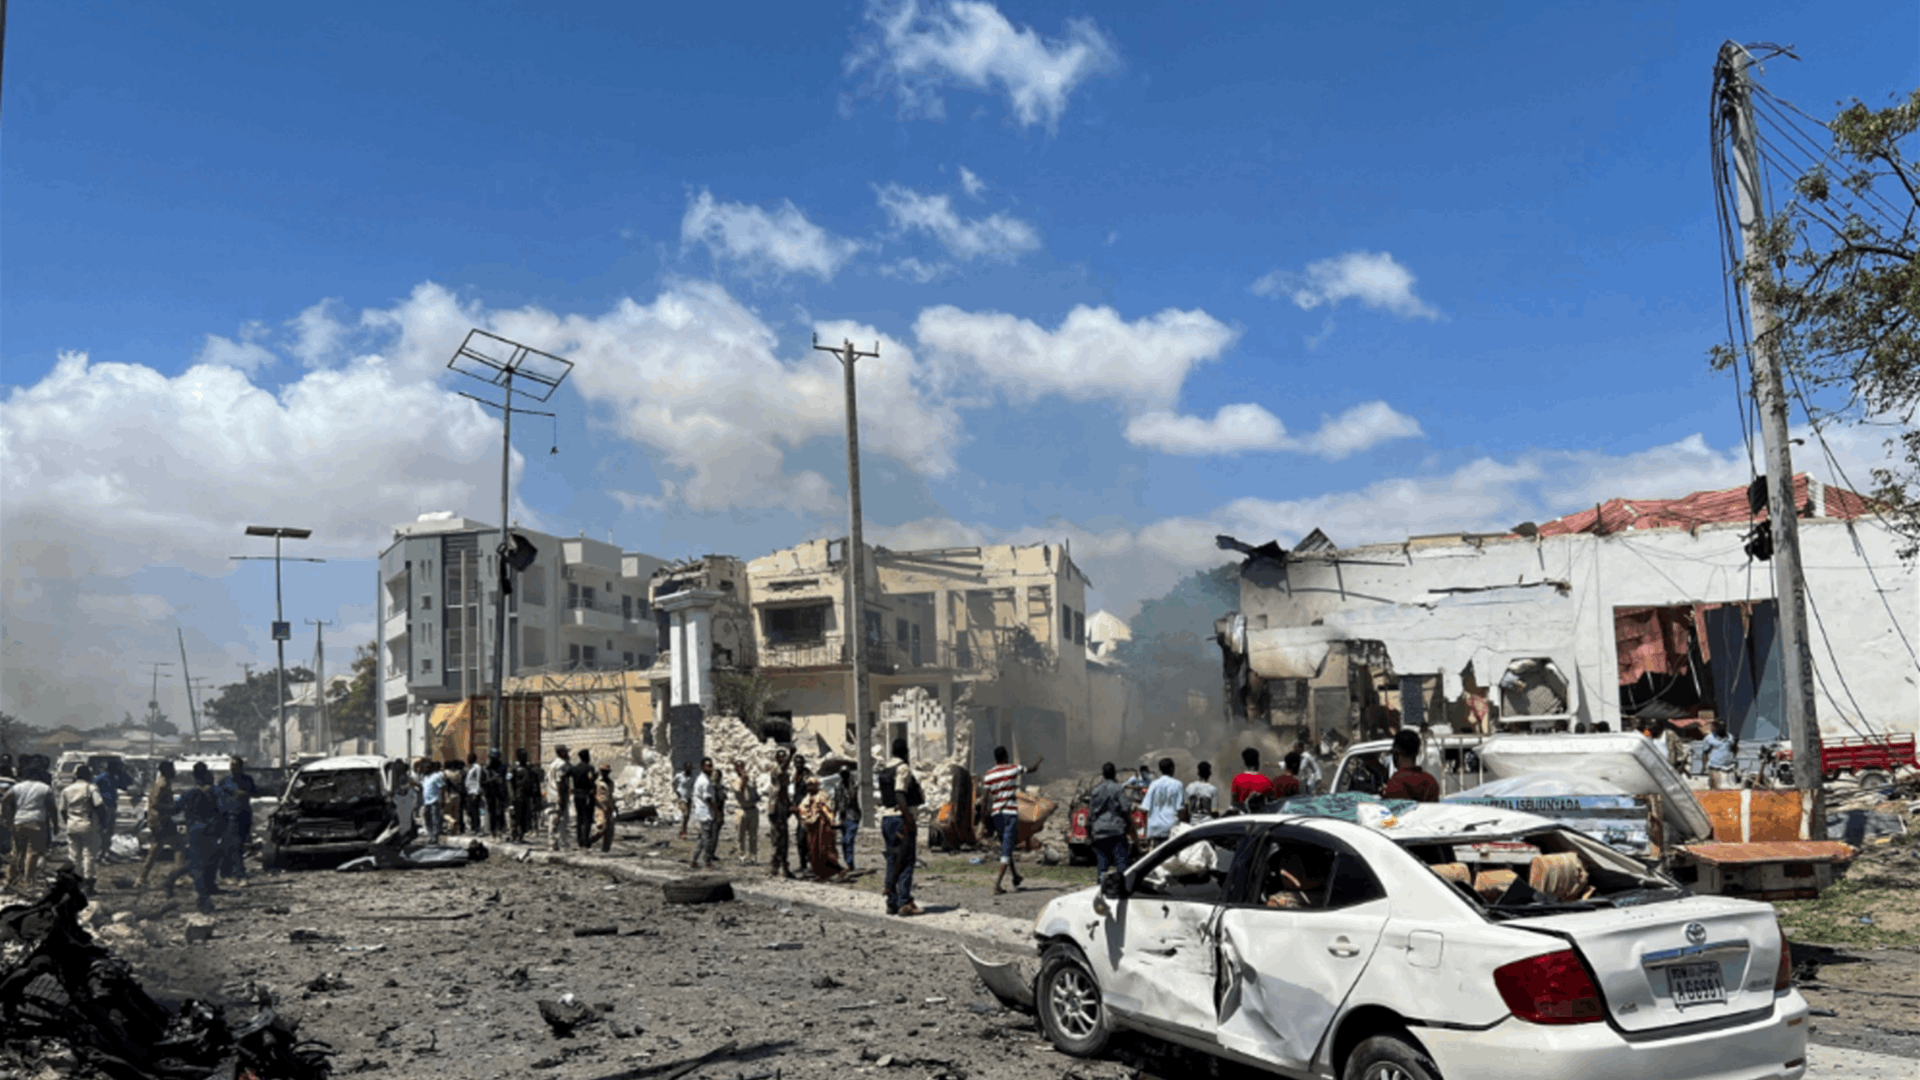 Five dead in suicide bombing in central Somalia